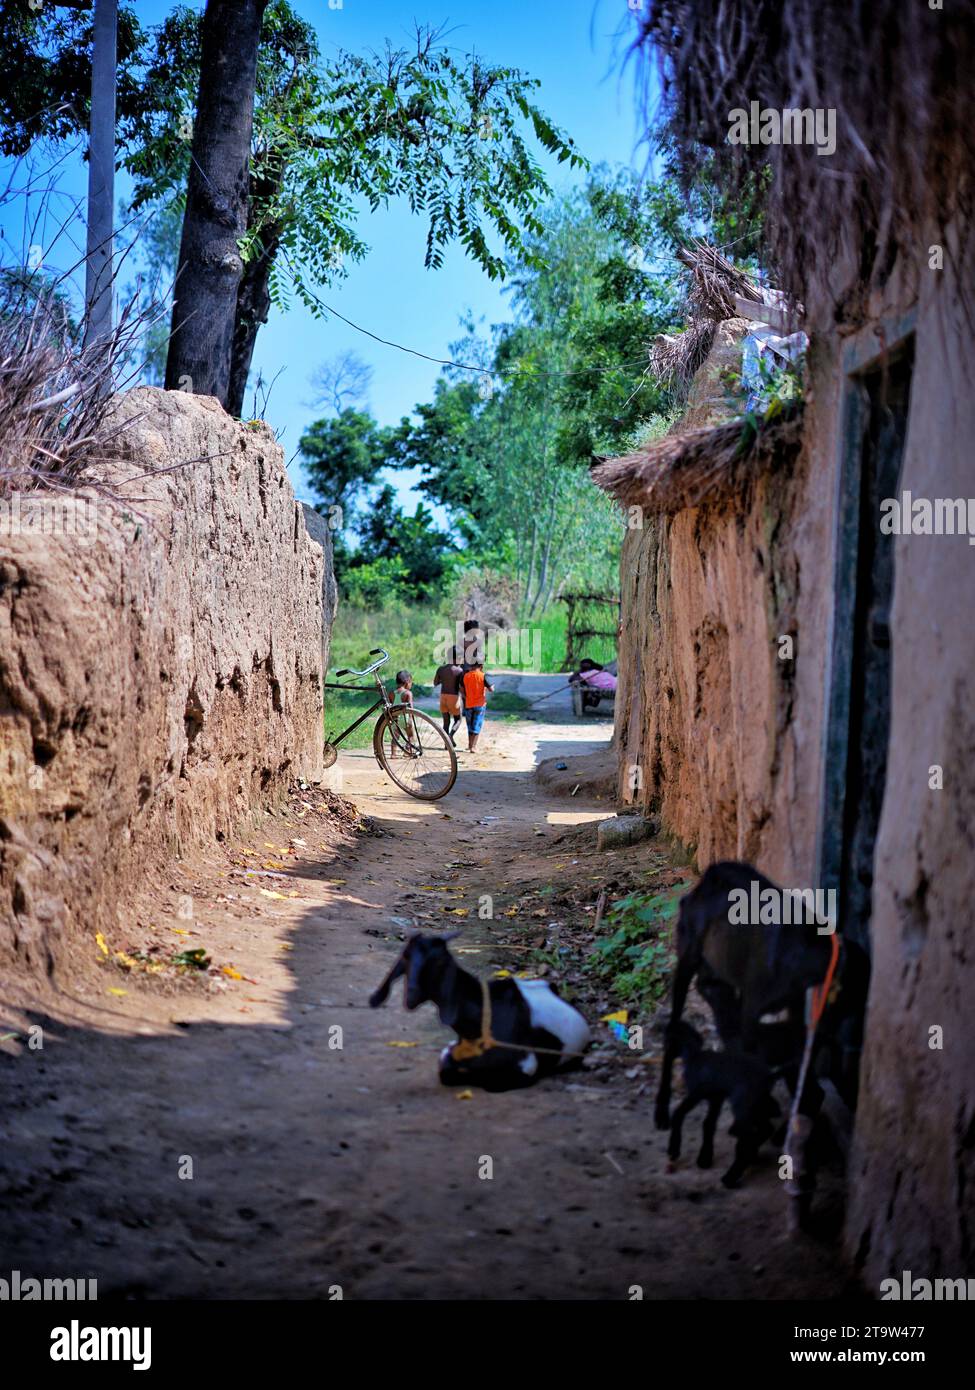 Corridor of mud houses in the village of Uttar Pradesh in India. Stock Photo